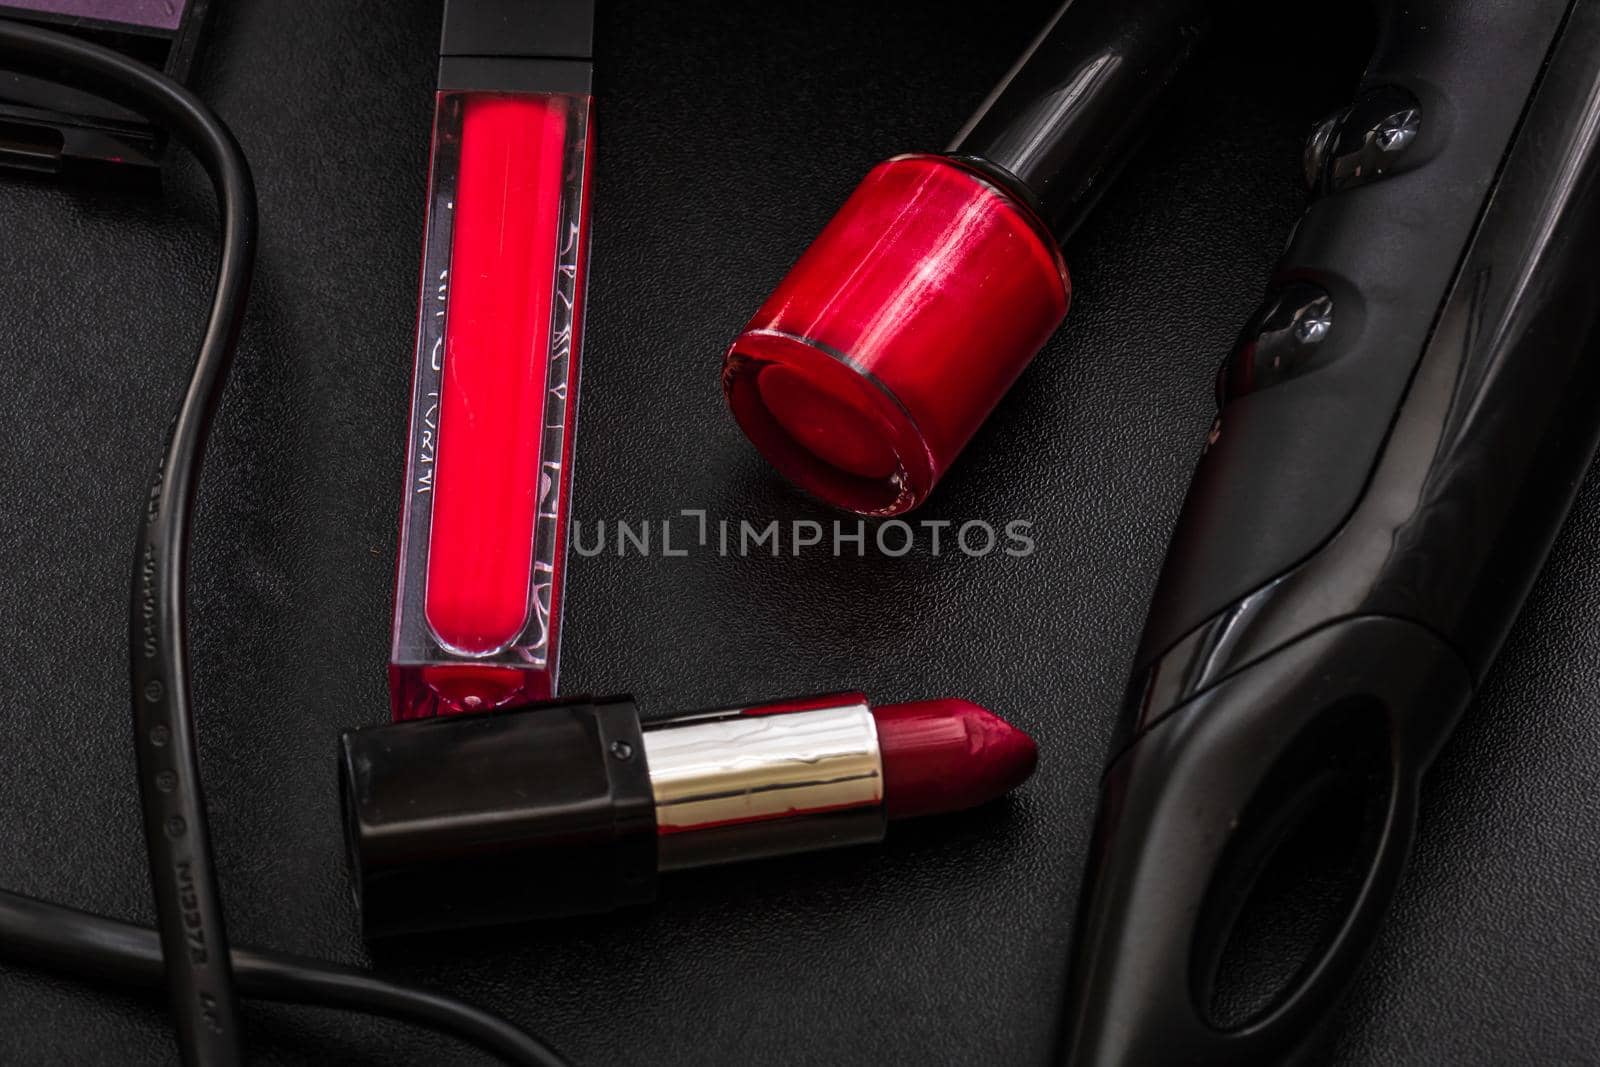 Cosmetics on a black, nail polish, eye shadow palette, lipstick, brush, parfume